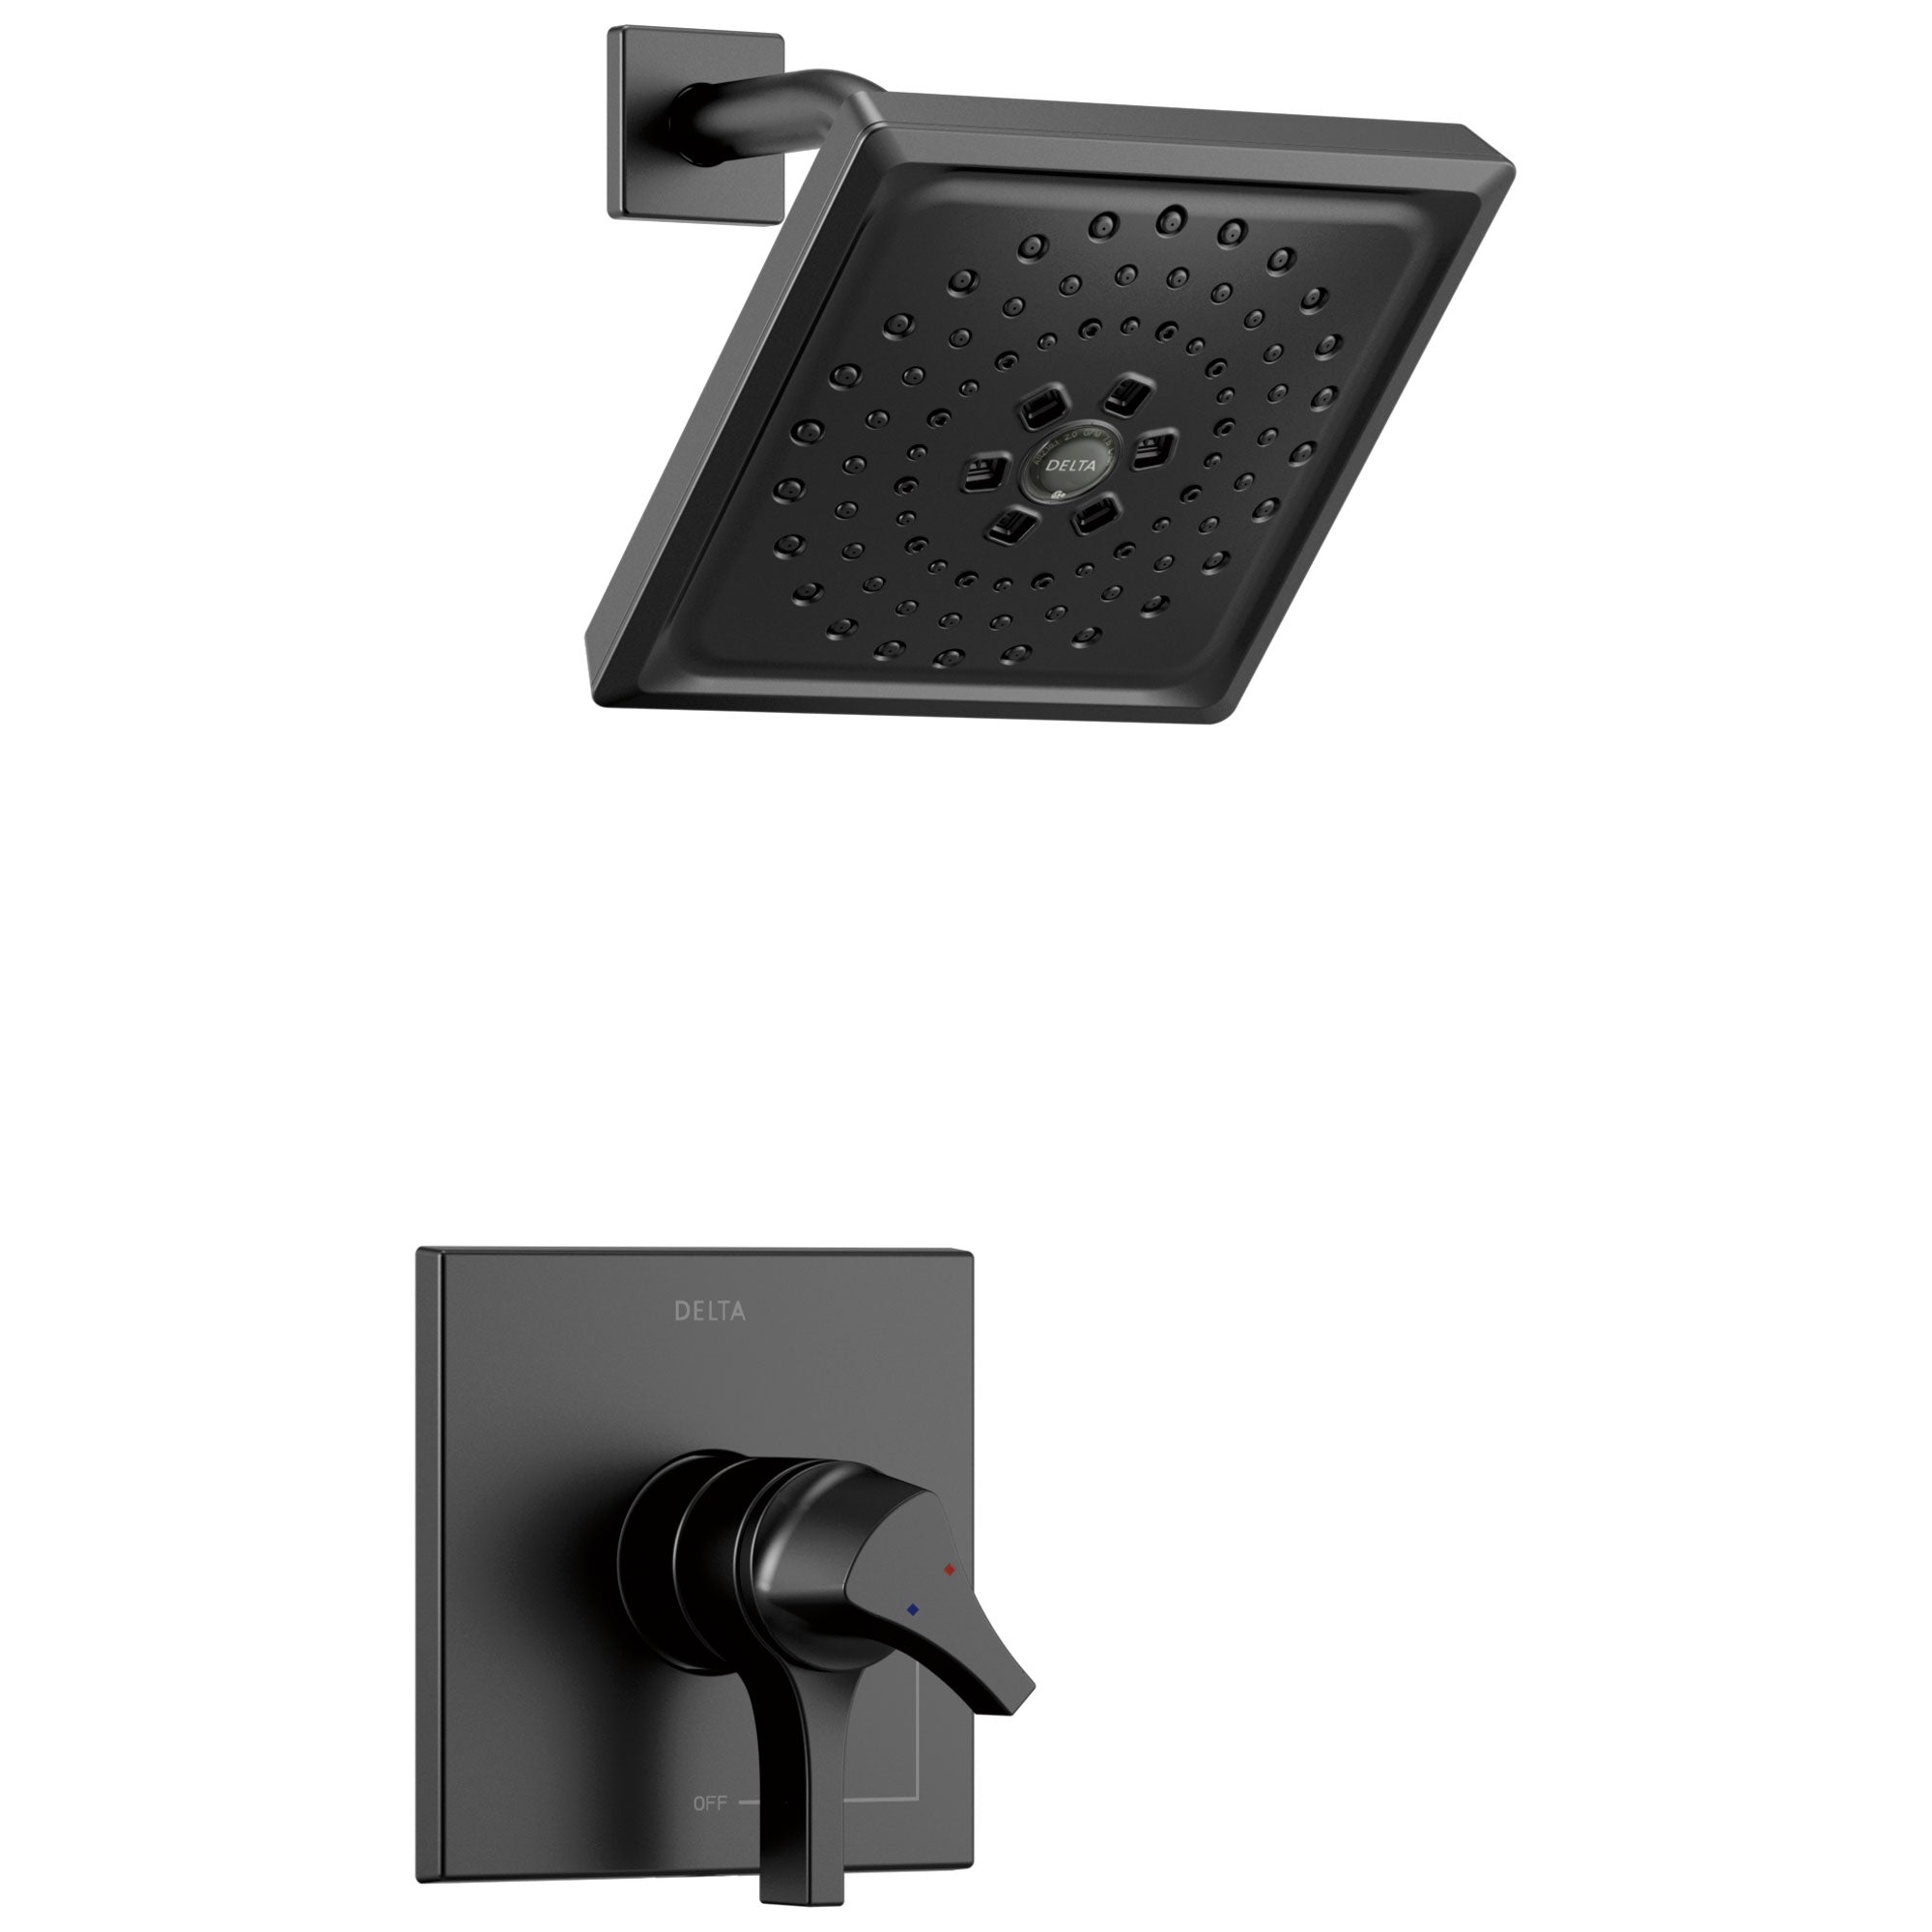 Delta Zura Matte Black Finish Monitor 17 Series H2Okinetic Shower Only Faucet Trim Kit (Requires Valve) DT17274BL